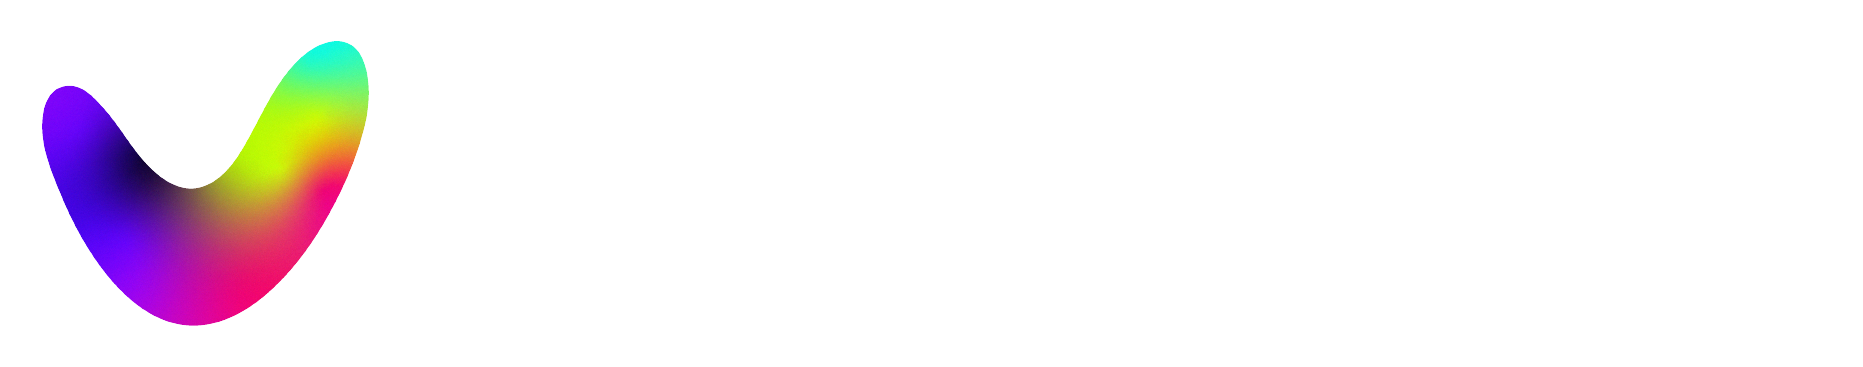 Vectara Logo